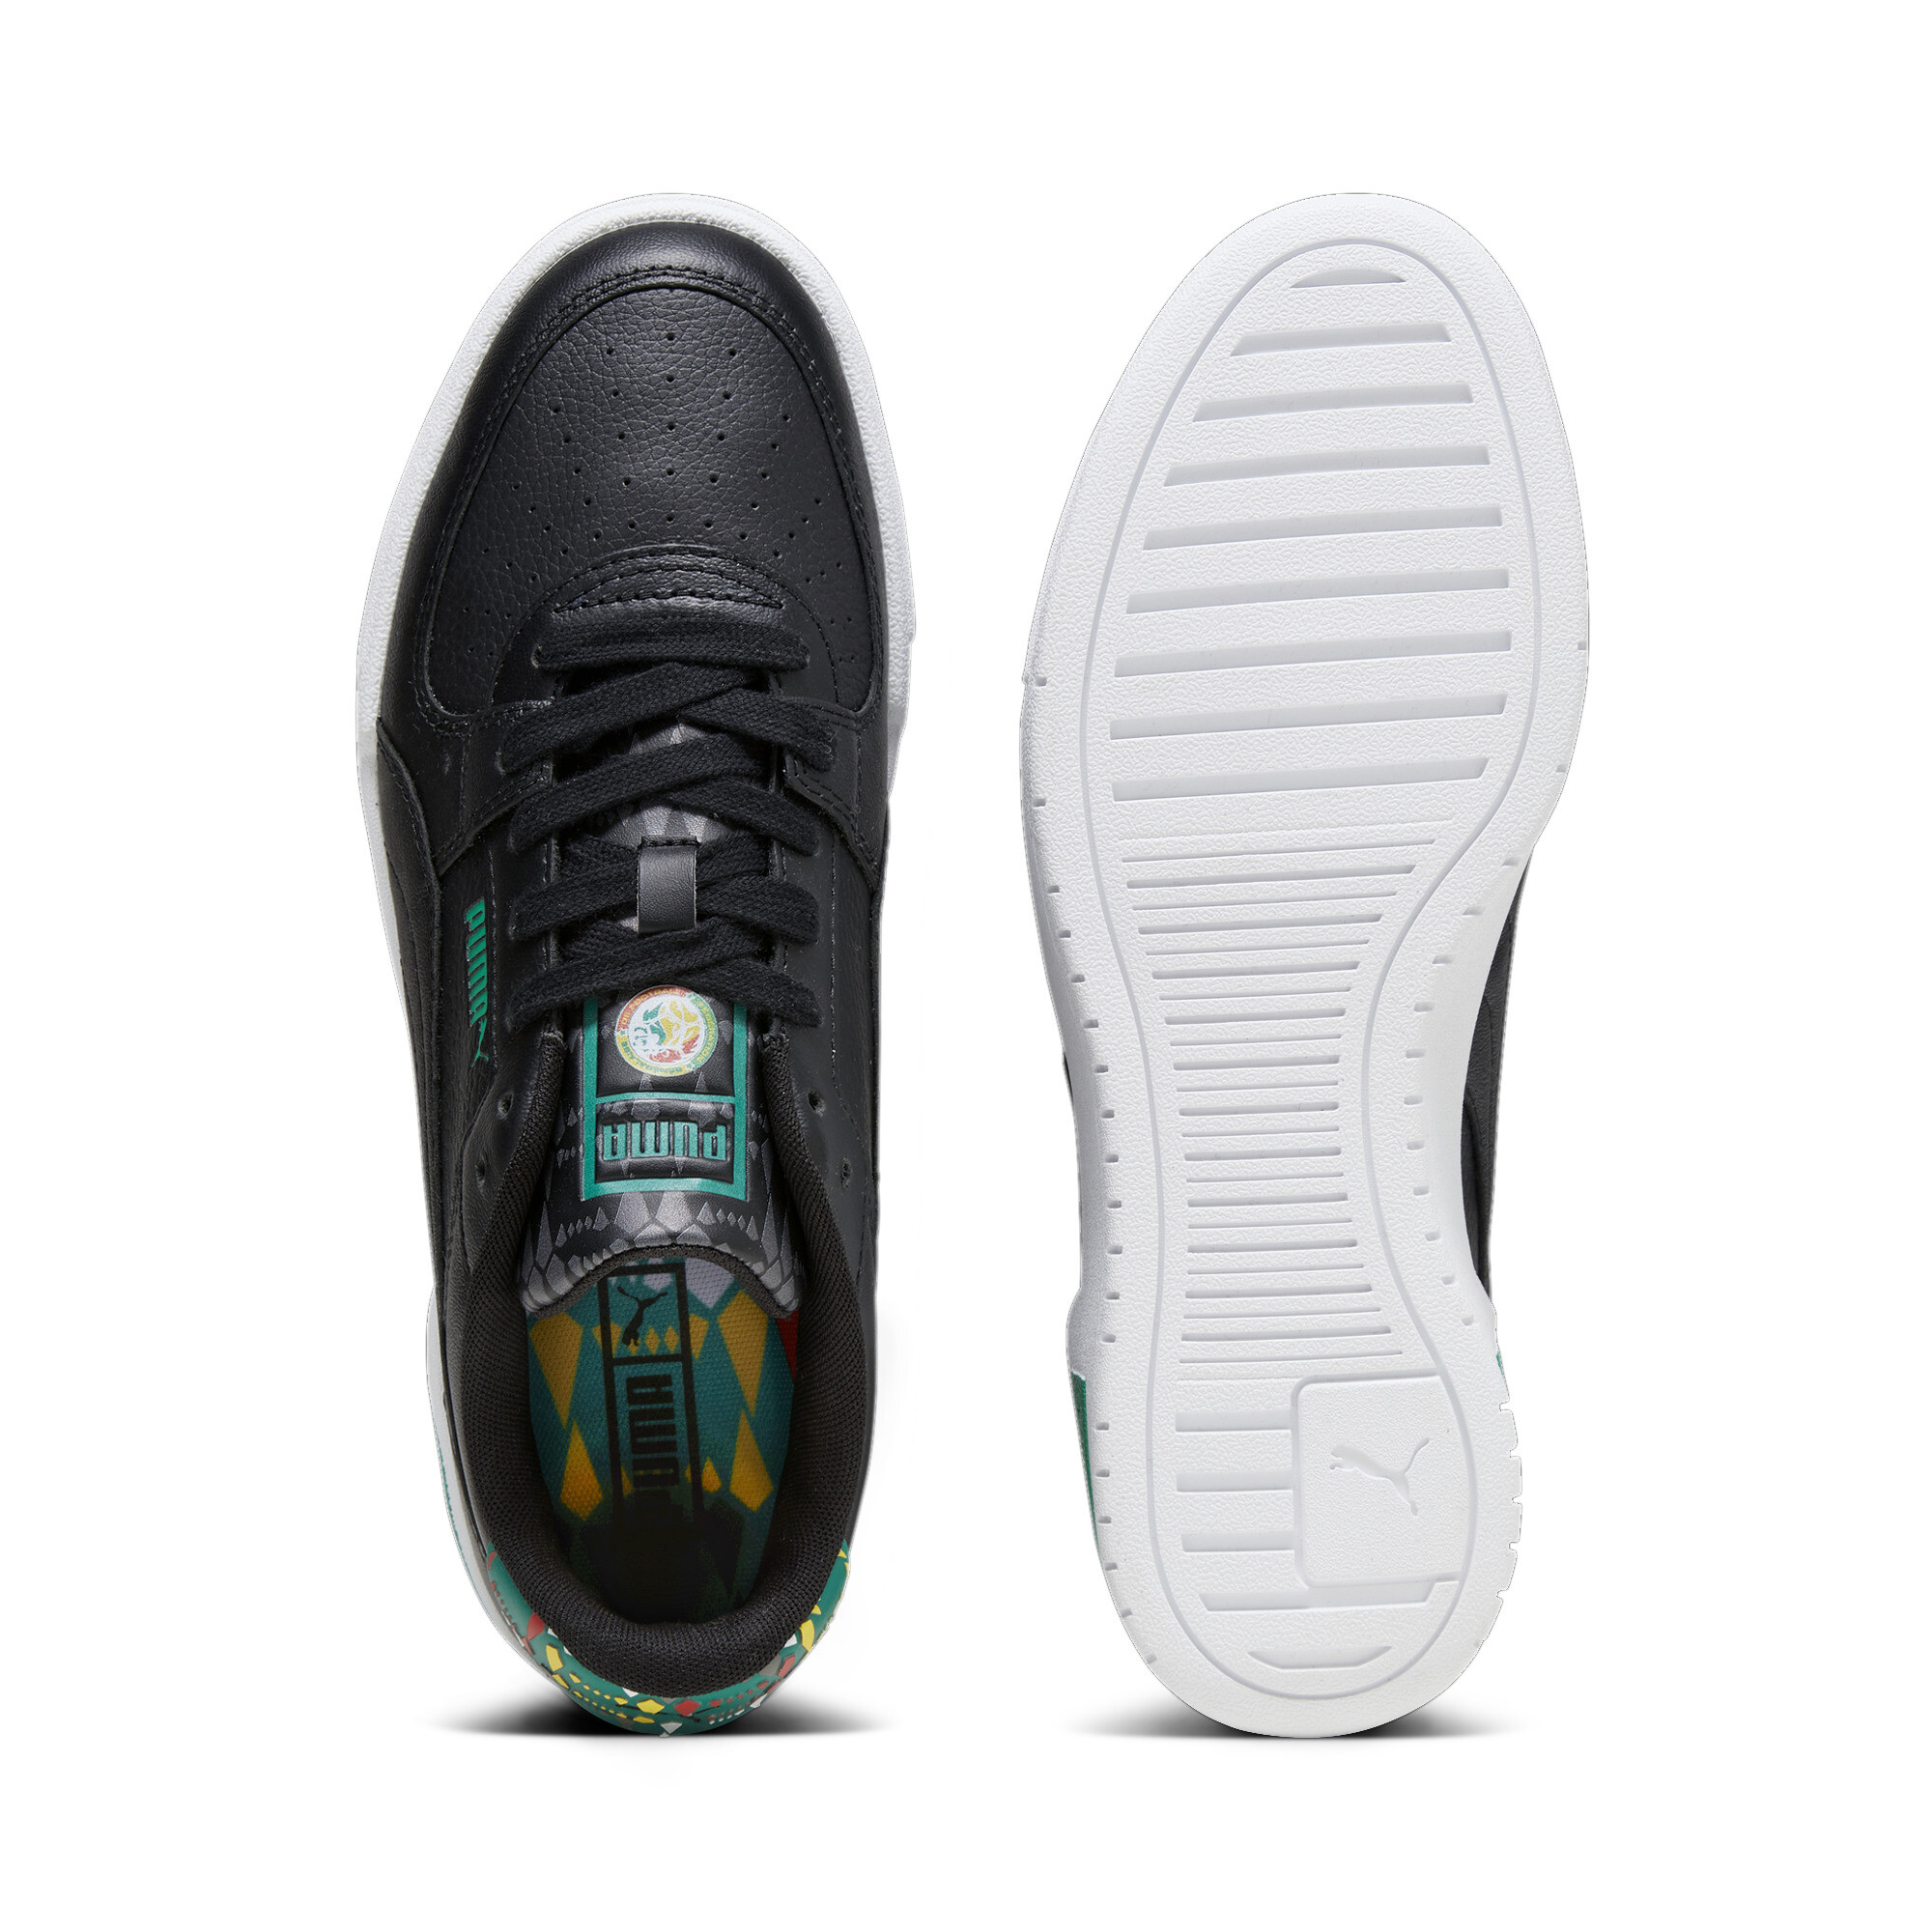 Men's PUMA CA Pro Senegal Football Sneakers In Black, Size EU 44.5